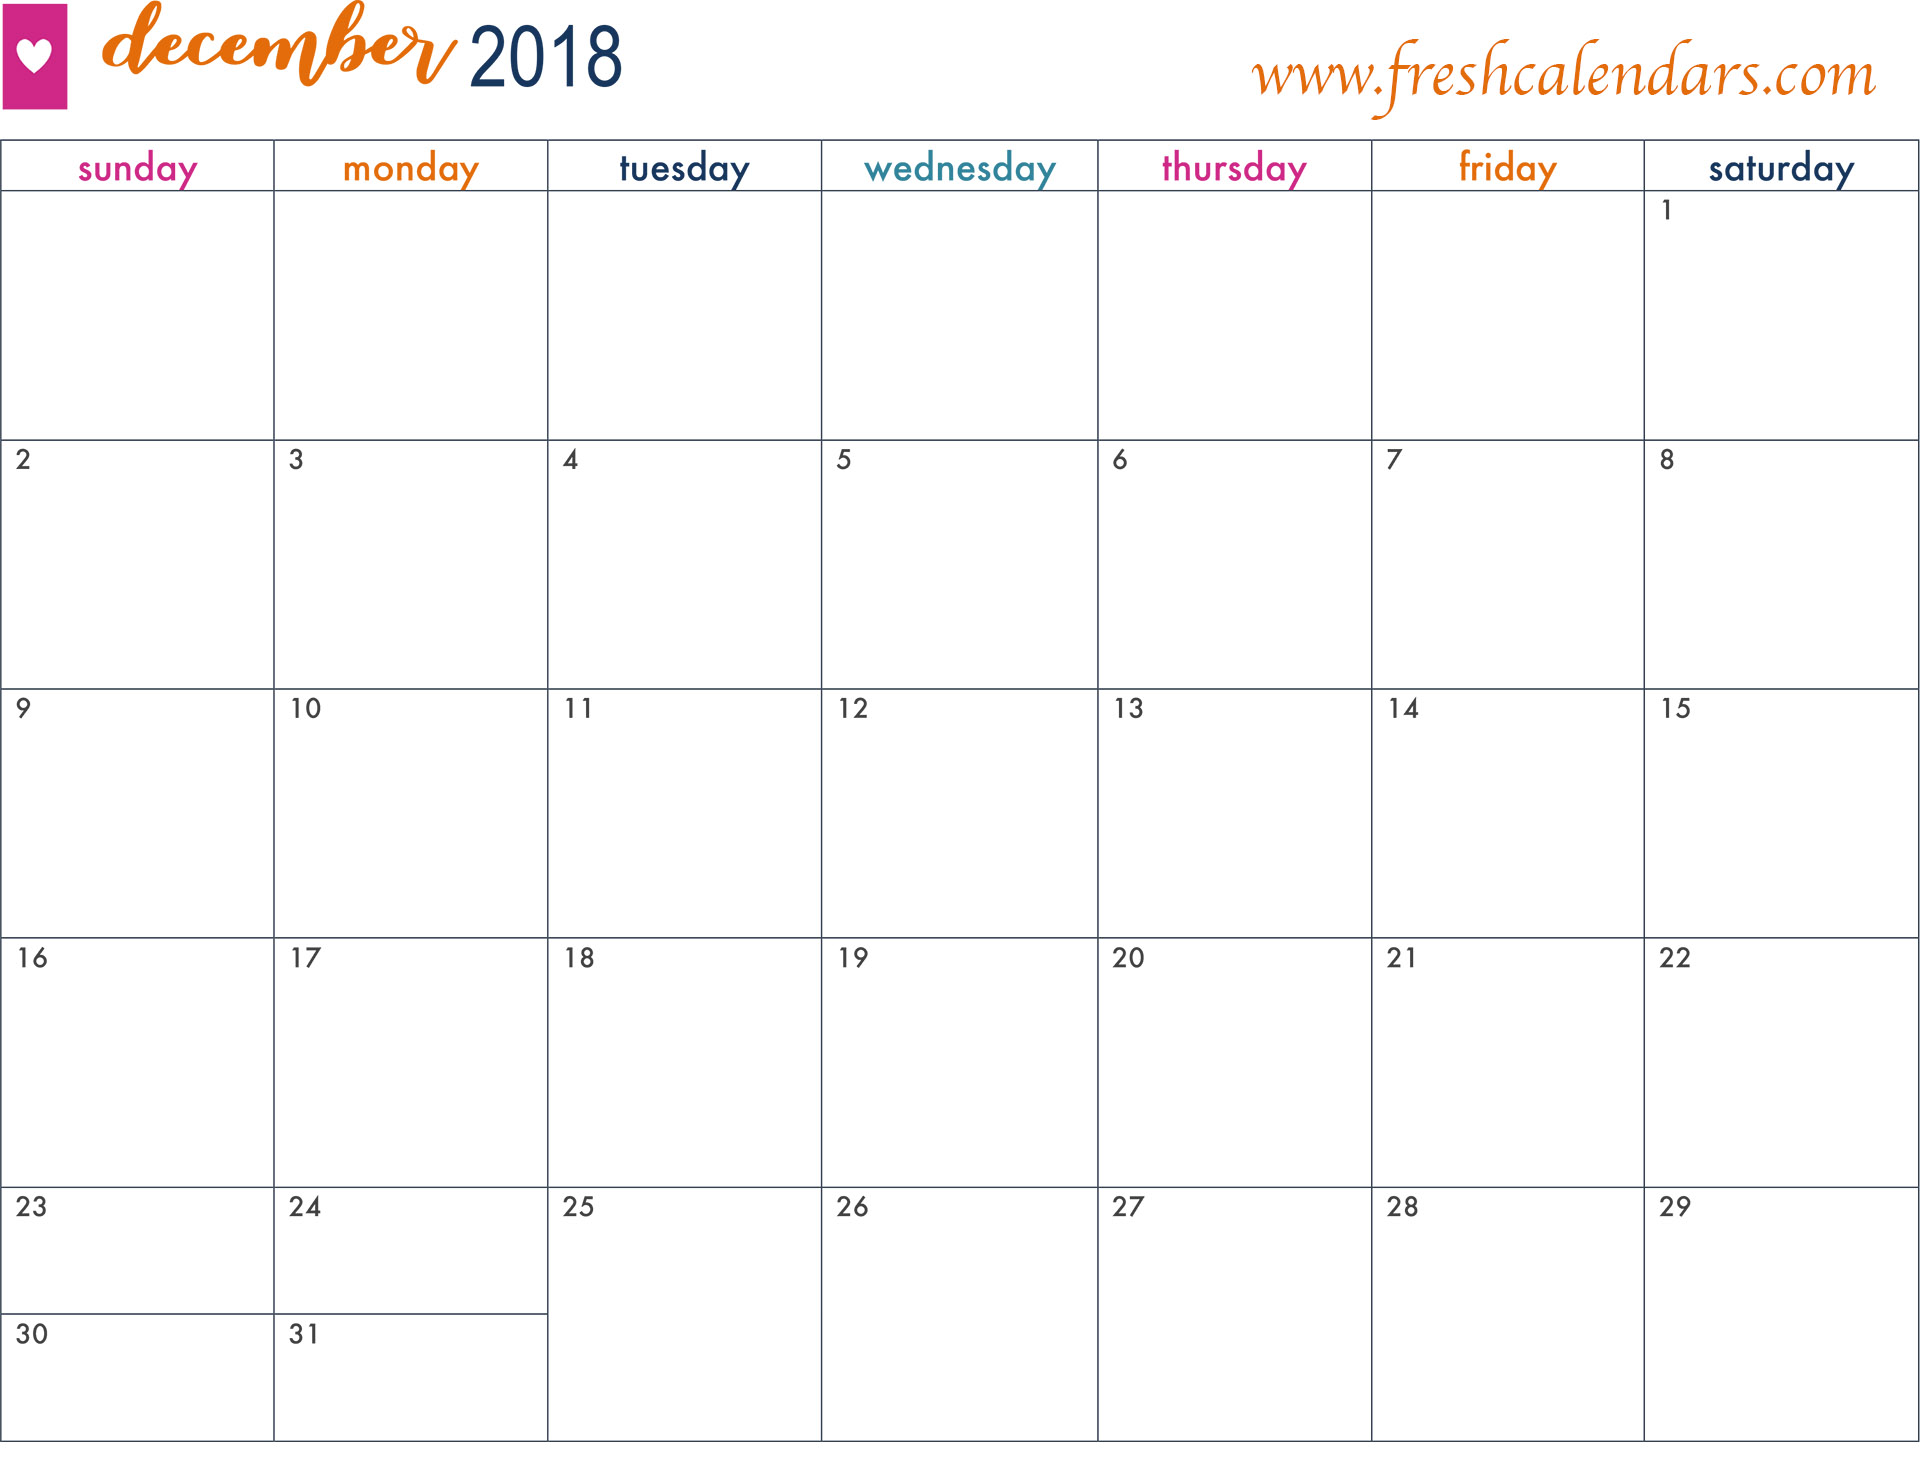 December calendar 2018 free colorful